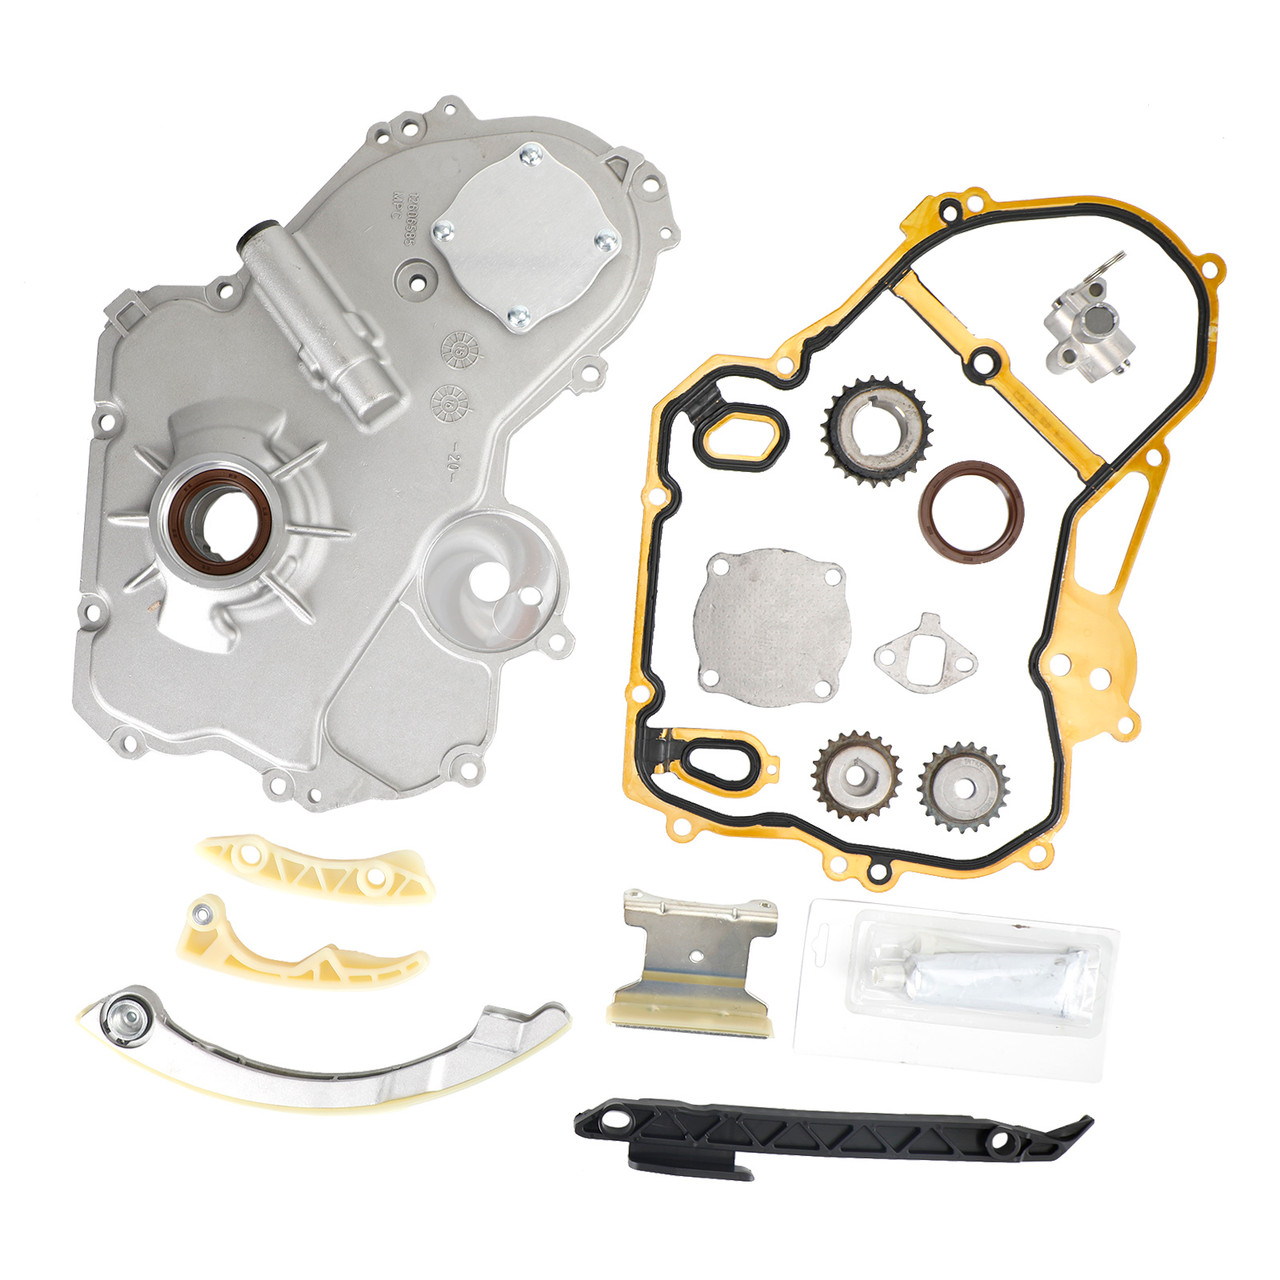 2010-2012 CHEVROLET MALIBU 2.4L Timing Chain Kit Oil Pump Selenoid Actuator Gear Cover Kit